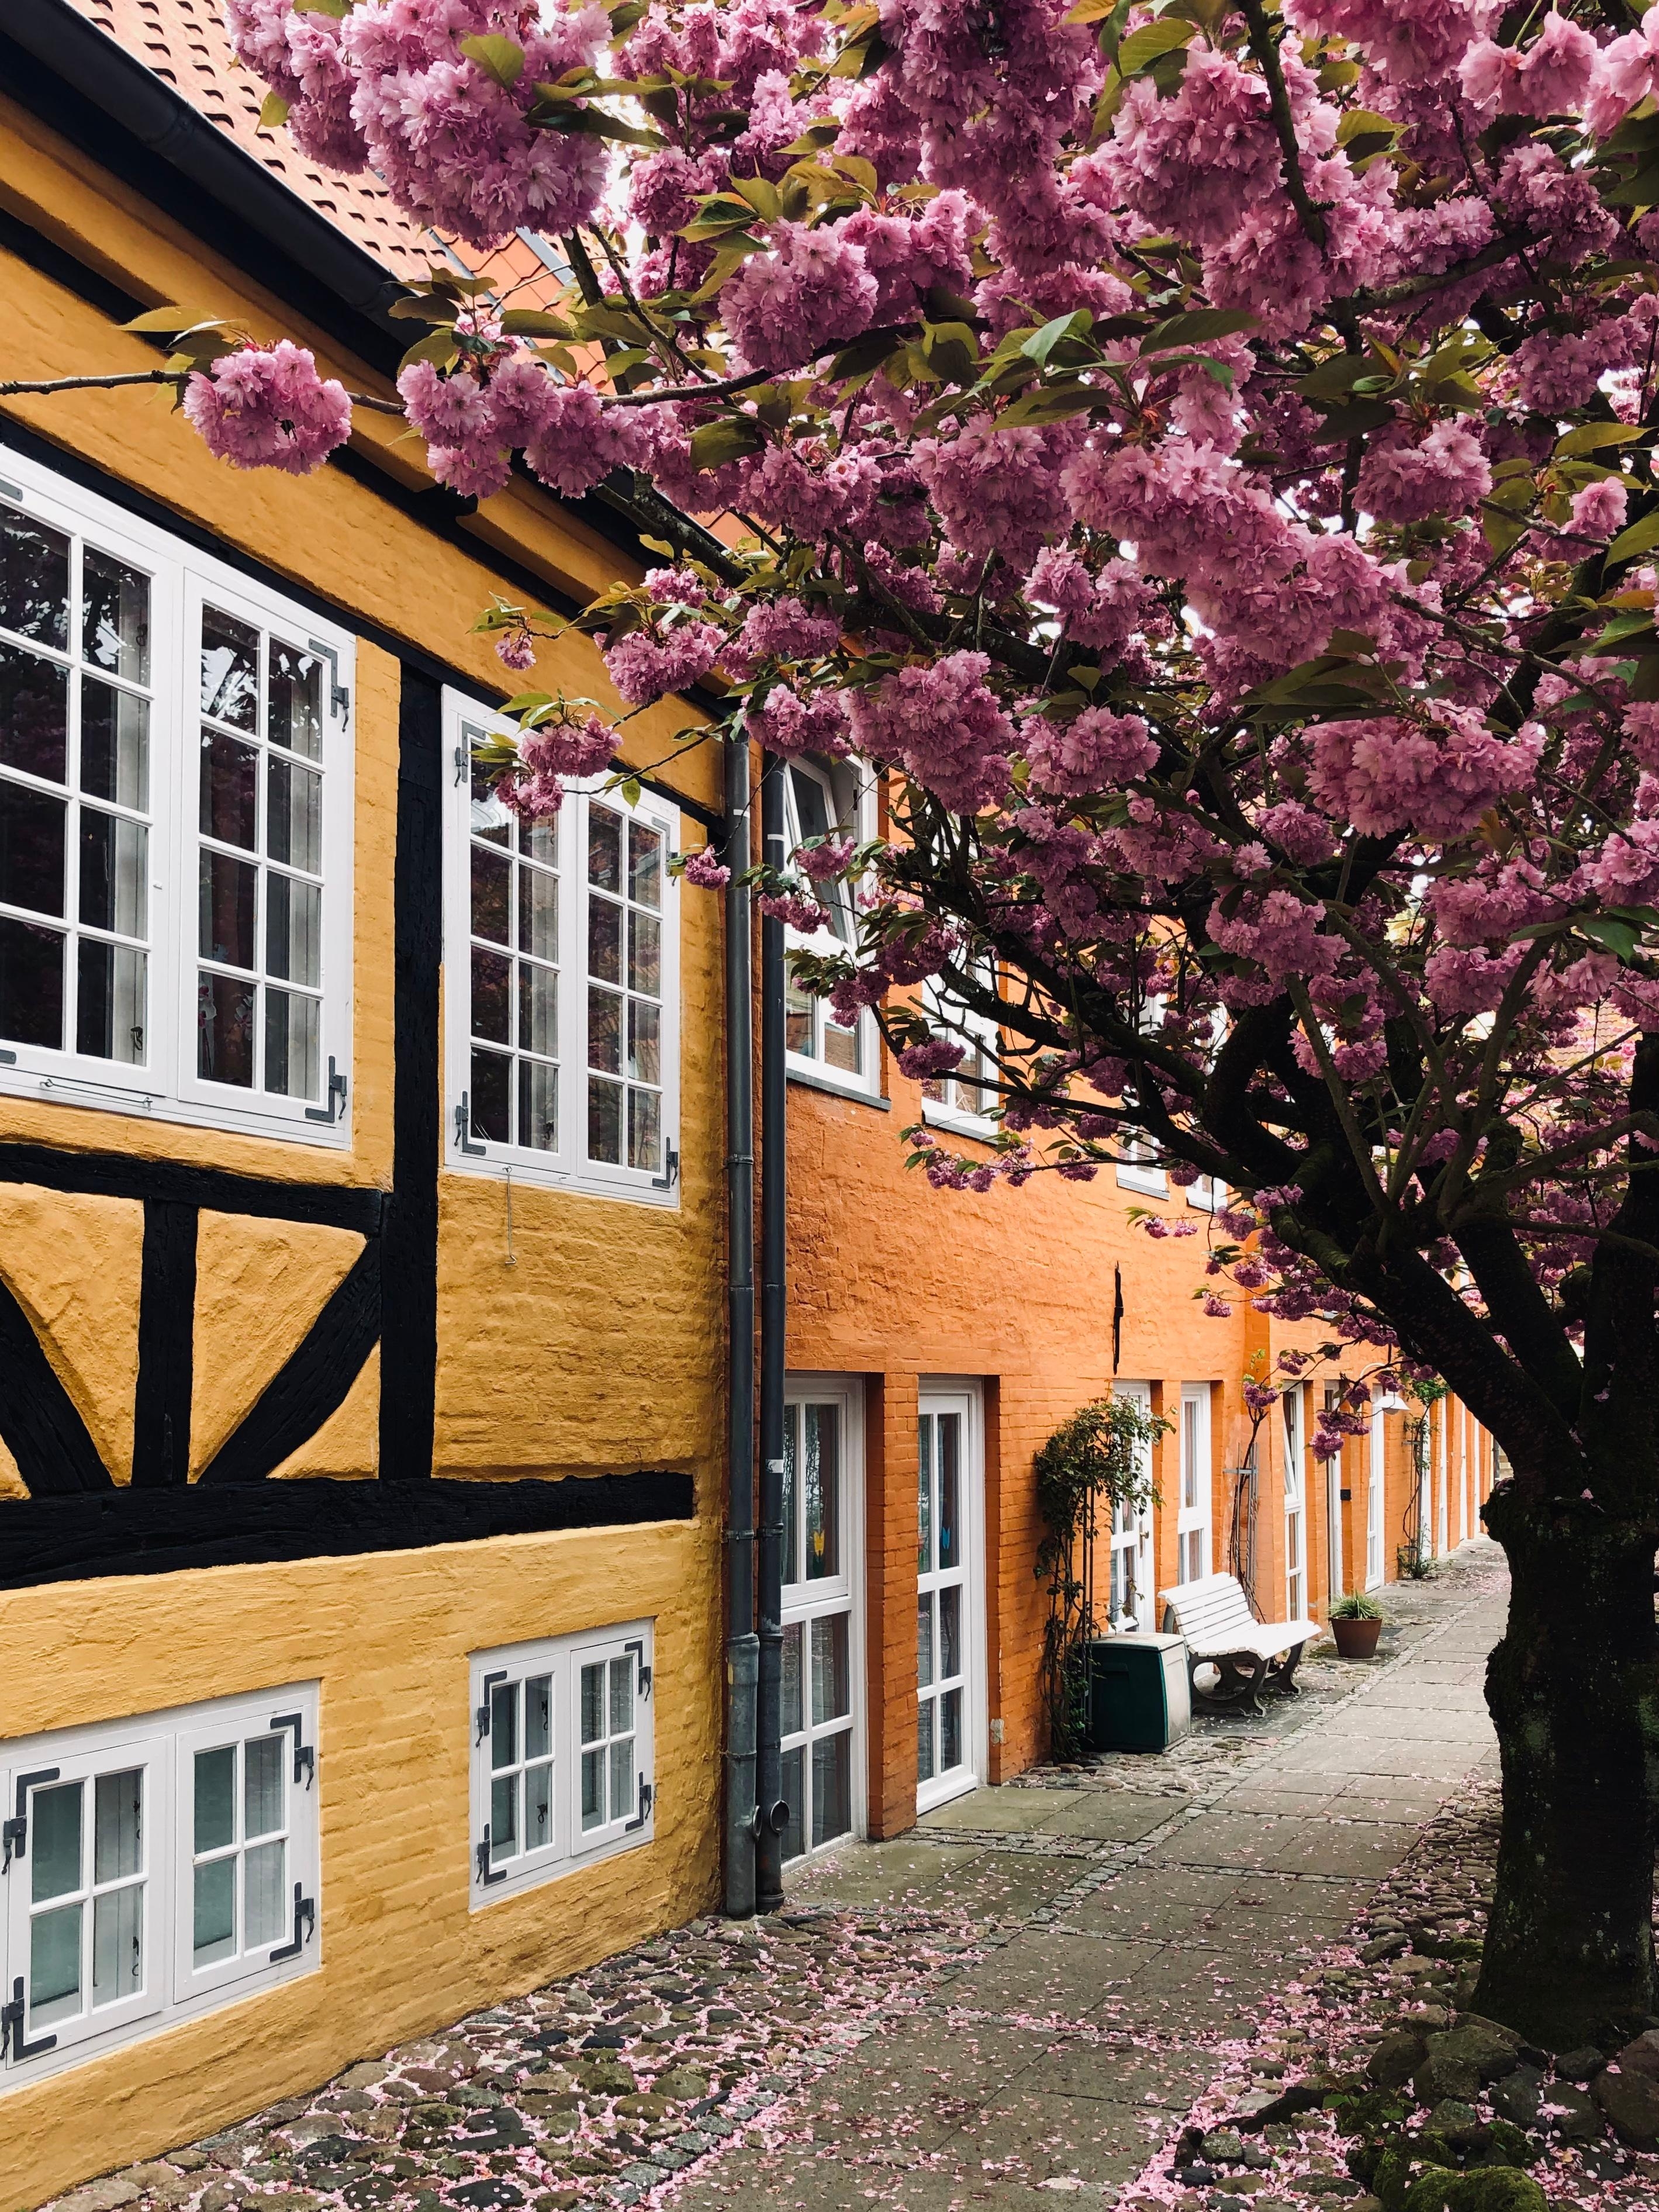 Hinterhofromantik 🌸
#cherryblossom #springdetails #flensburgerhöfe 